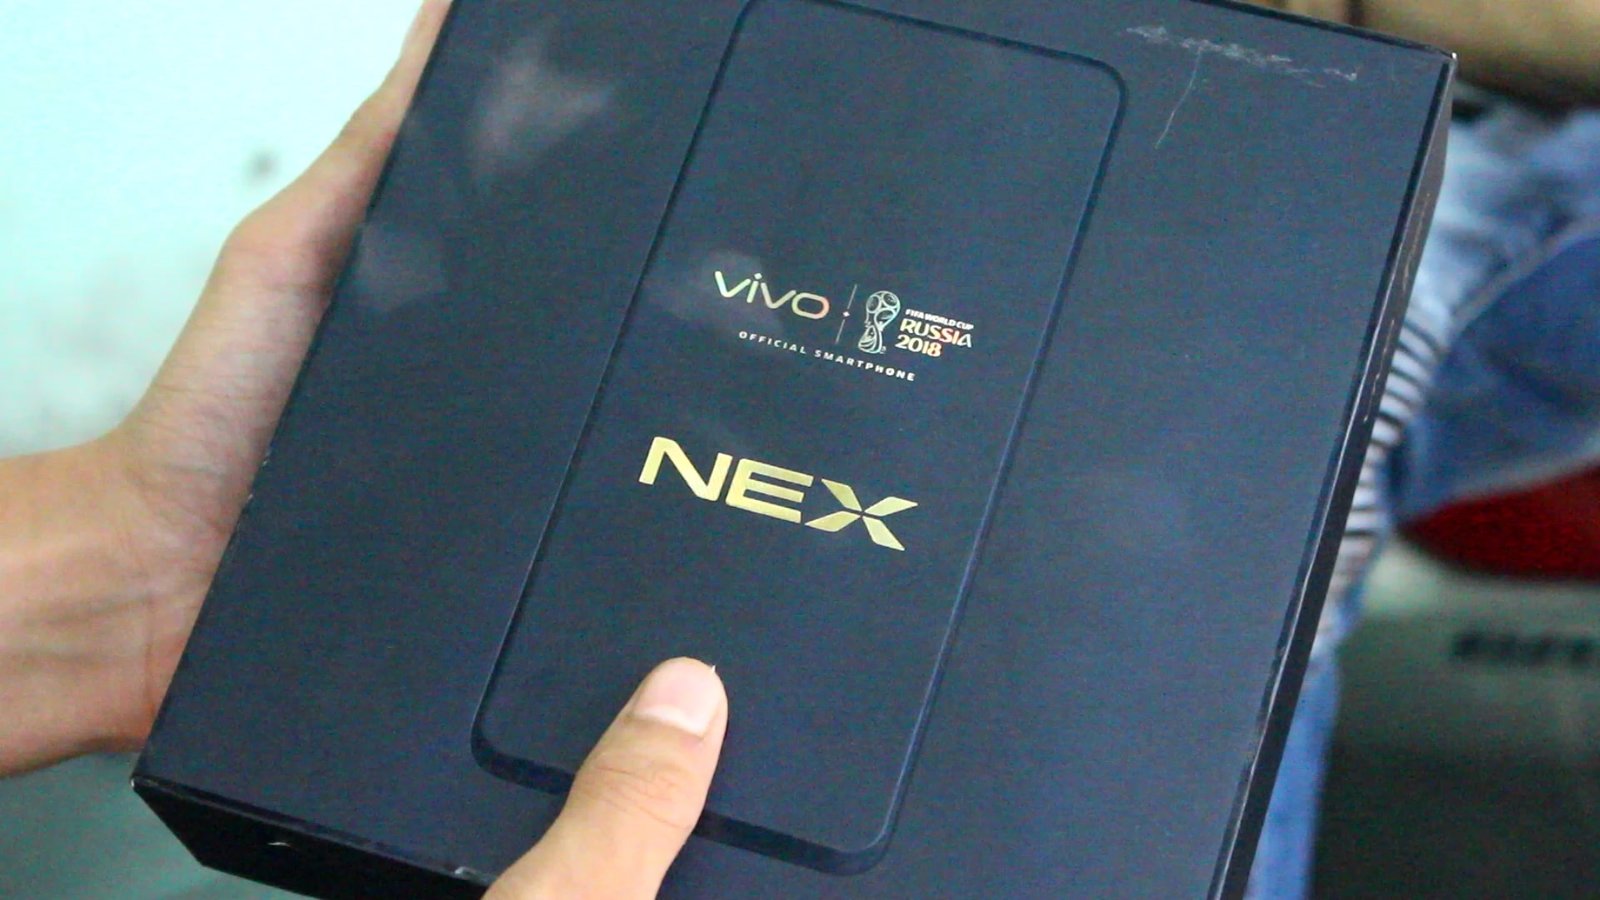 Vivo NEX Box